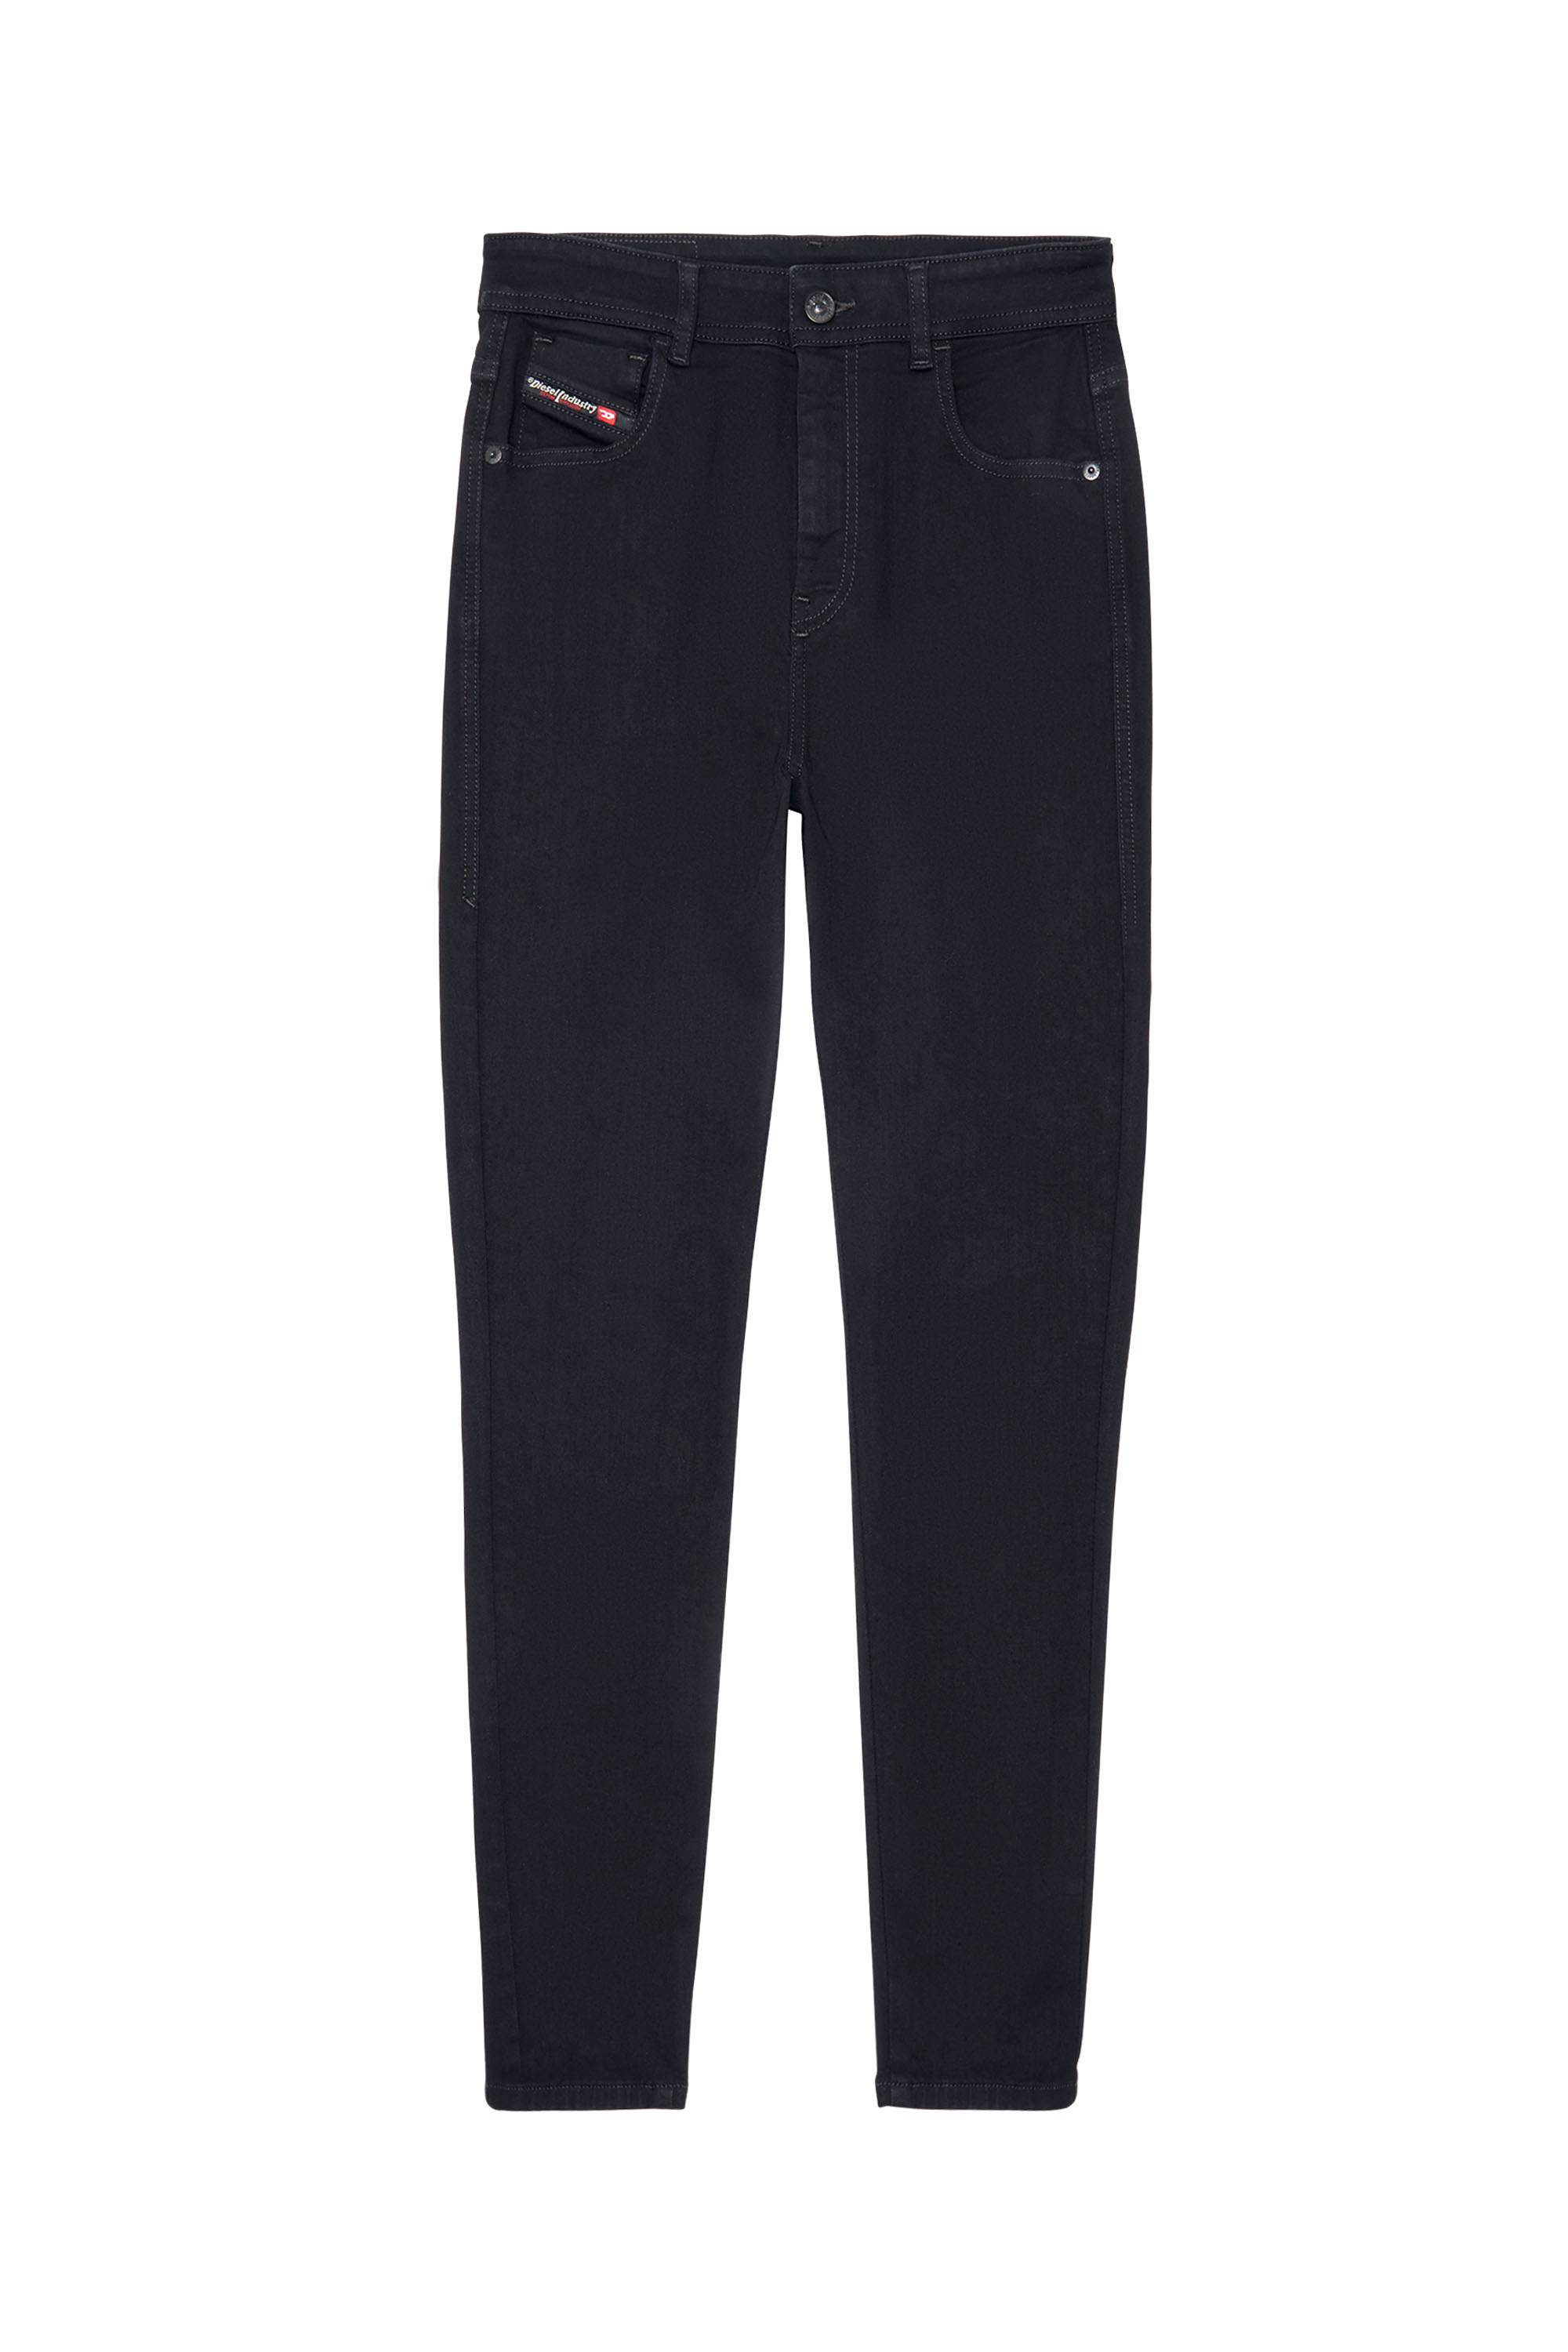 Super skinny Jeans 1984 Slandy-High 069EF, Black/Dark grey - Jeans